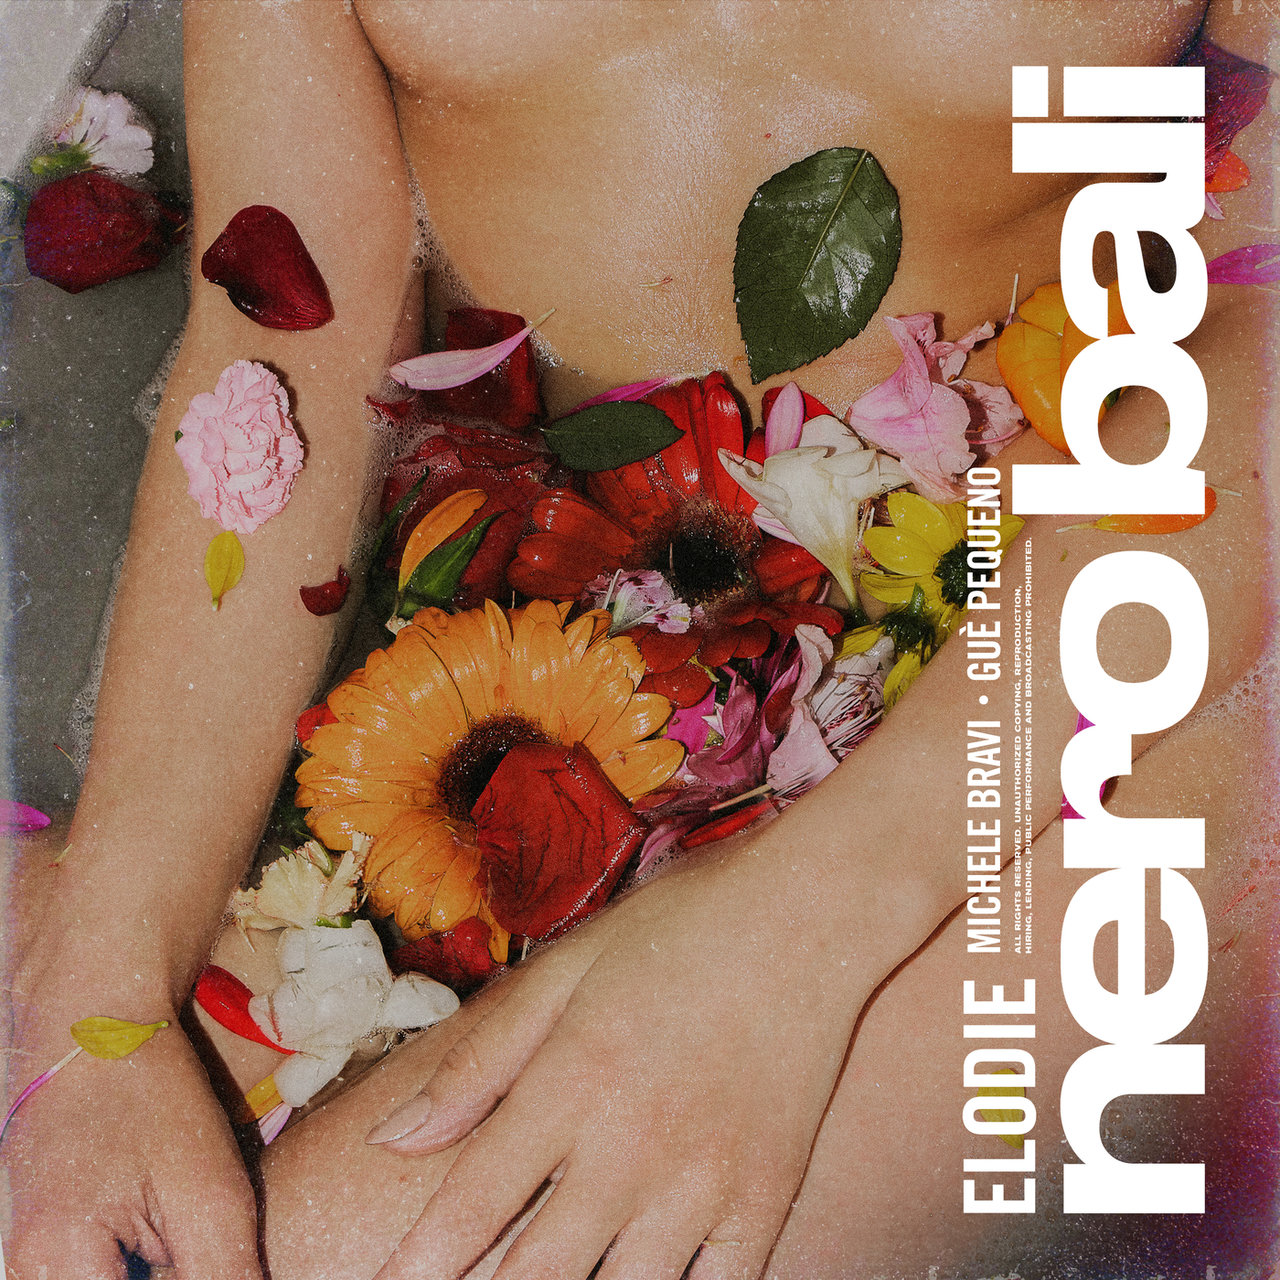 Elodie, Michele Bravi, & Guè Pequeno — Nero Bali cover artwork